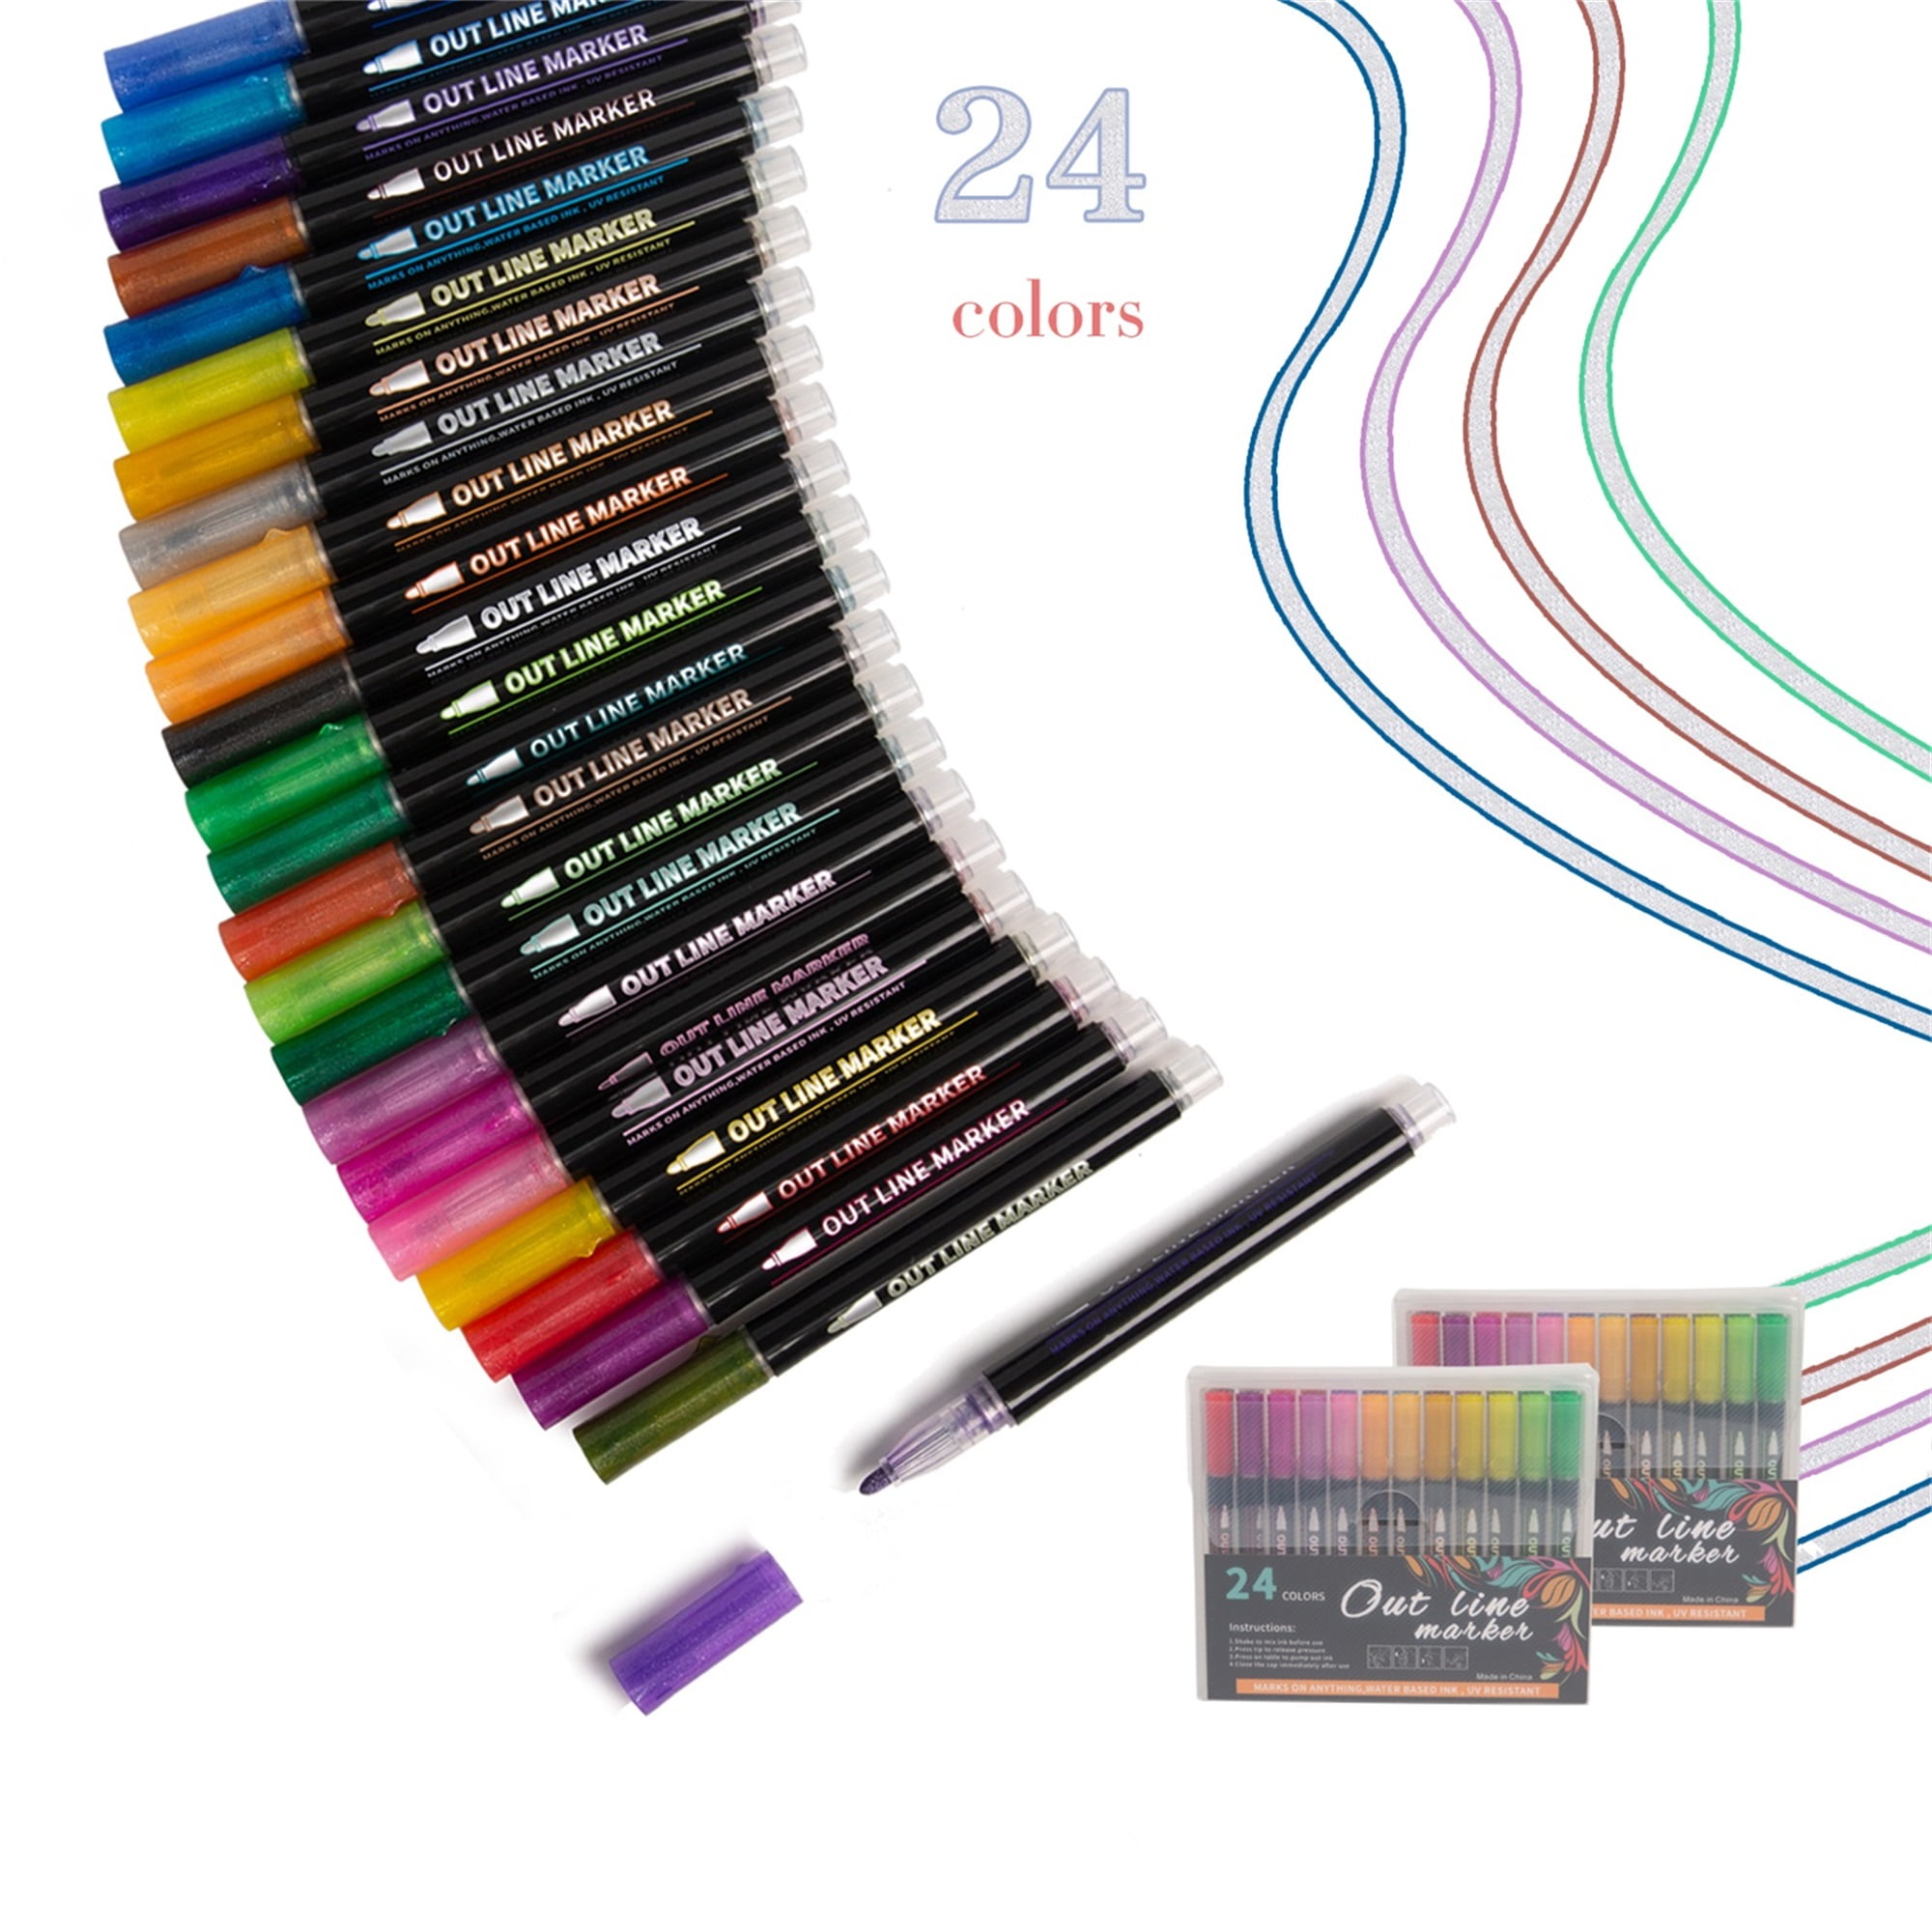 TEVILIK Double Line Outline Pens, 24 Colors Shimmer Markers, Self-Outline  Metallic Markers Glitter Writing Drawing Pens for Scrapbooking, Doodling